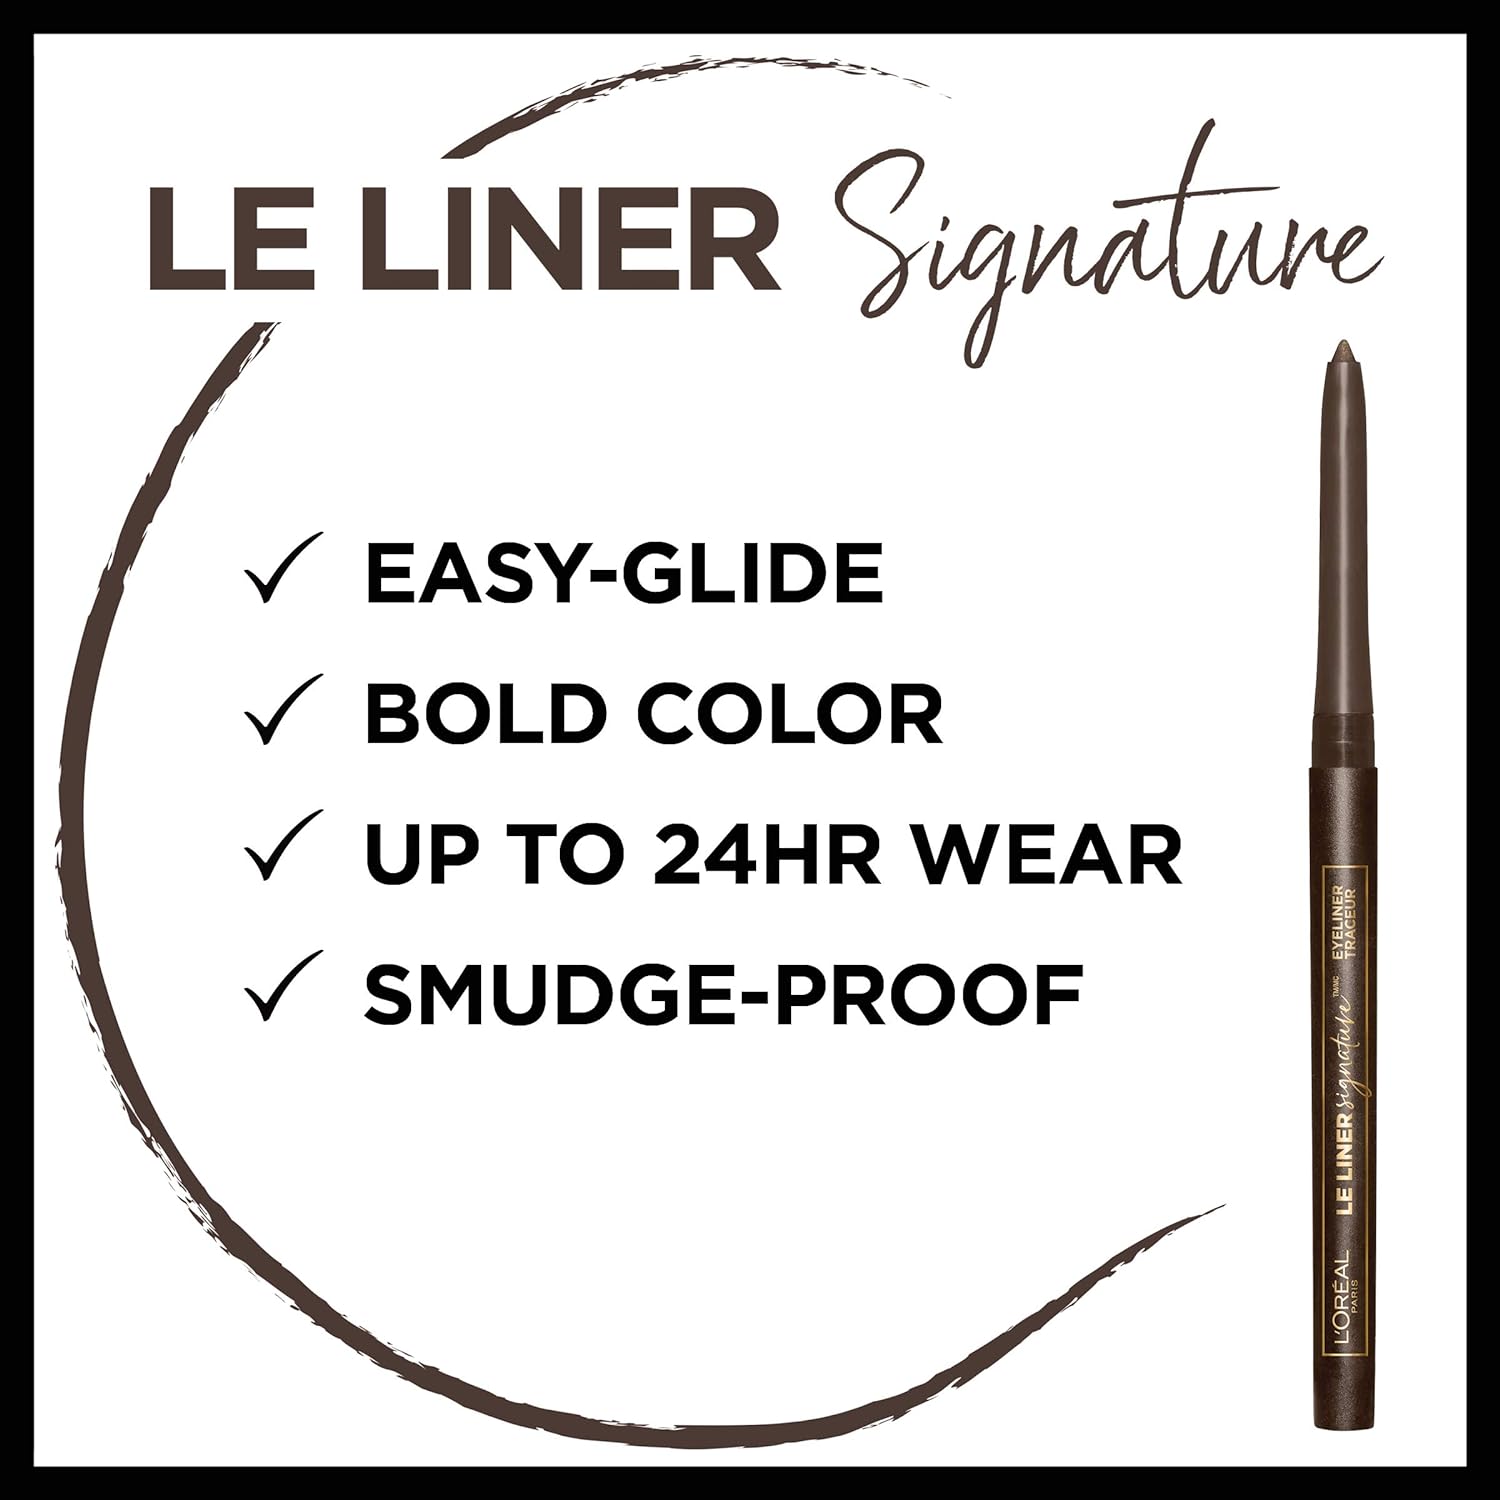  LOreal Paris Makeup Le Liner Signature Mechanical Eyeliner, Easy-Glide, Smudge Resistant, Bold Color, Long Lasting, Waterproof Eyeliner, Brown Denim, 0.011 oz., 1 count